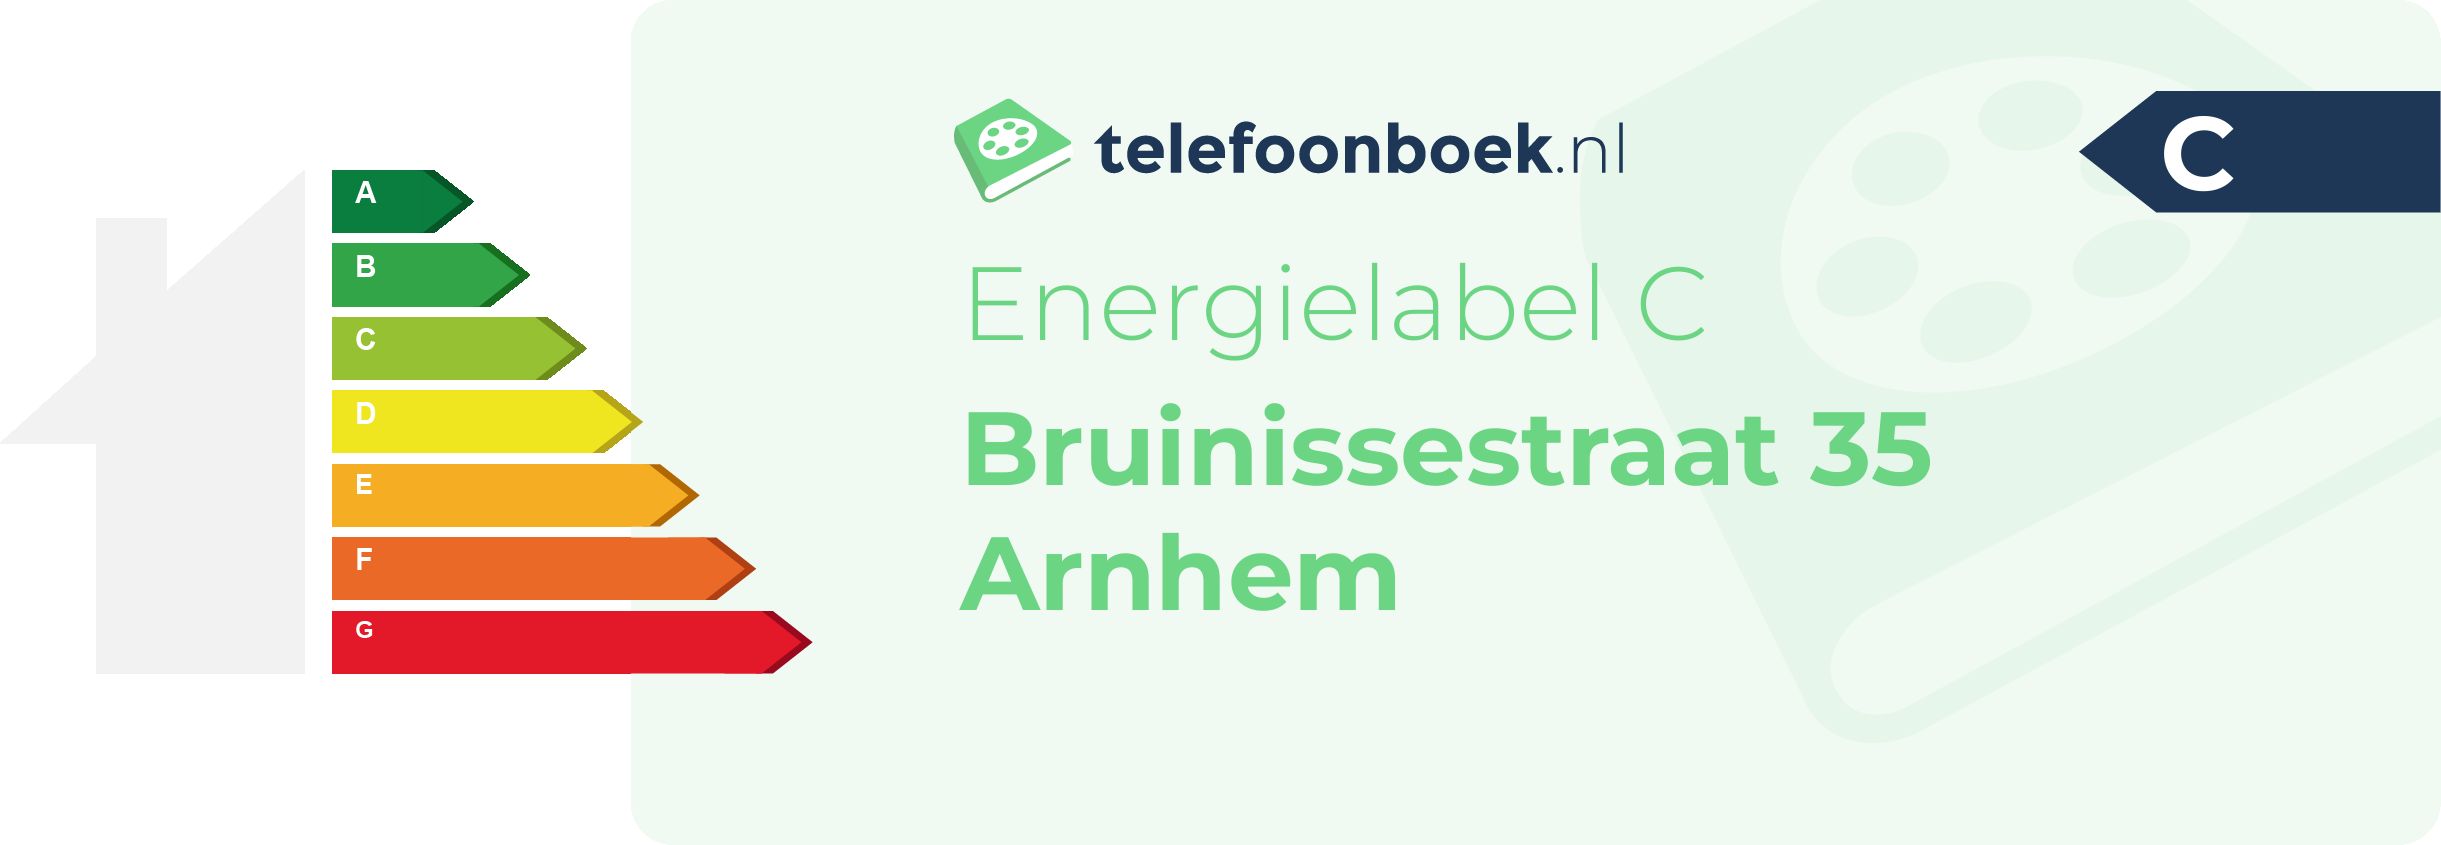 Energielabel Bruinissestraat 35 Arnhem